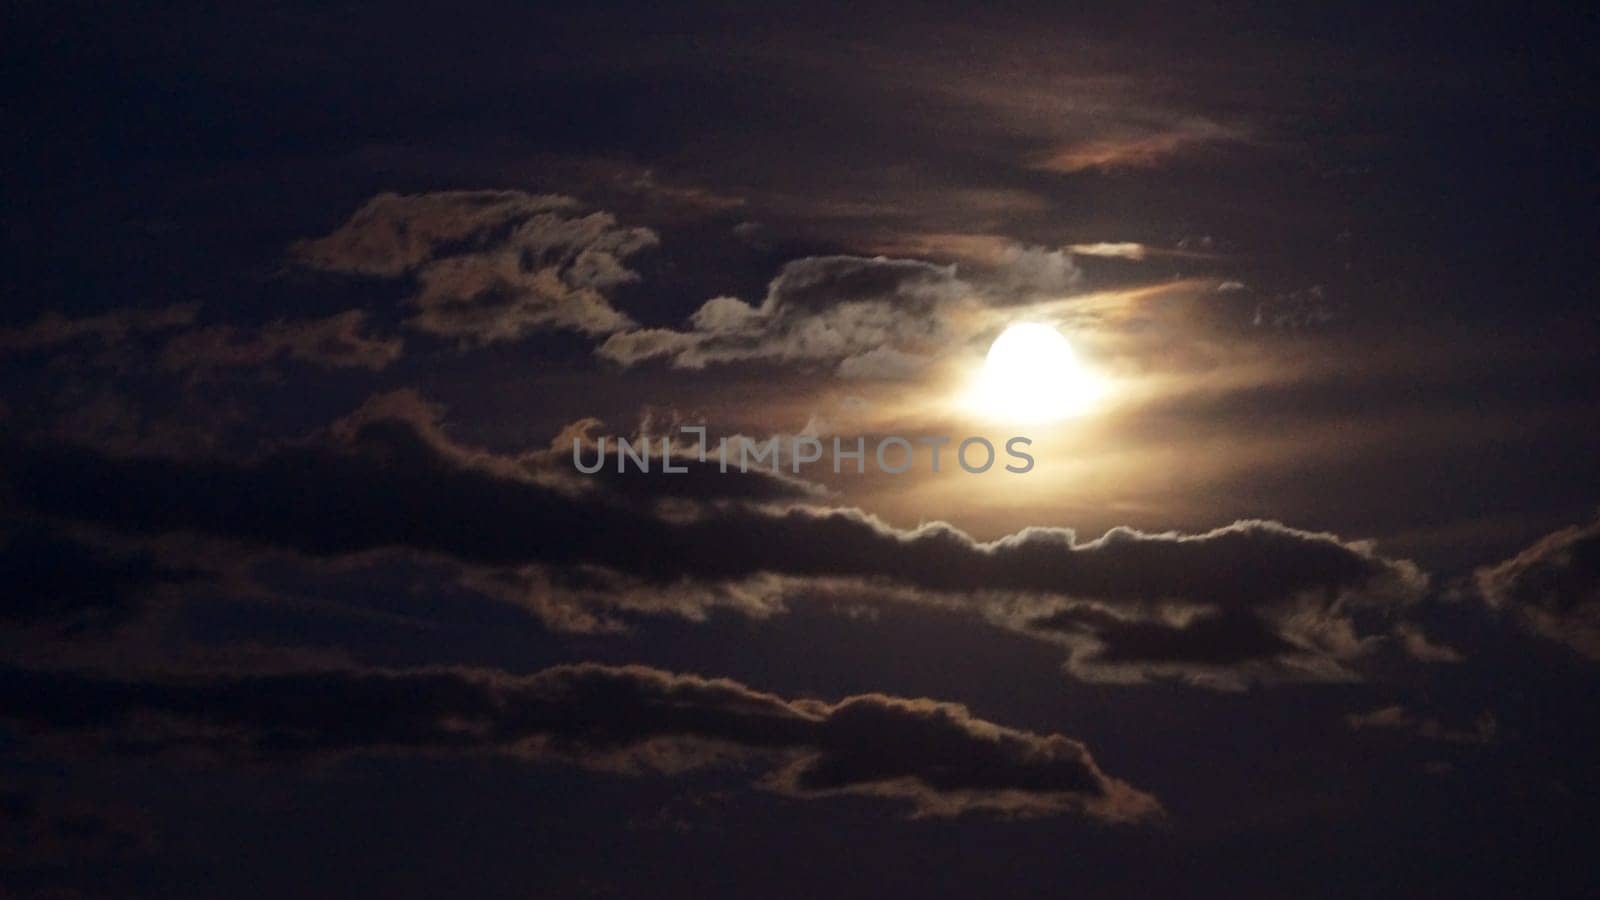 bright full moon illuminates the clouds in the night sky, dramatic sky.